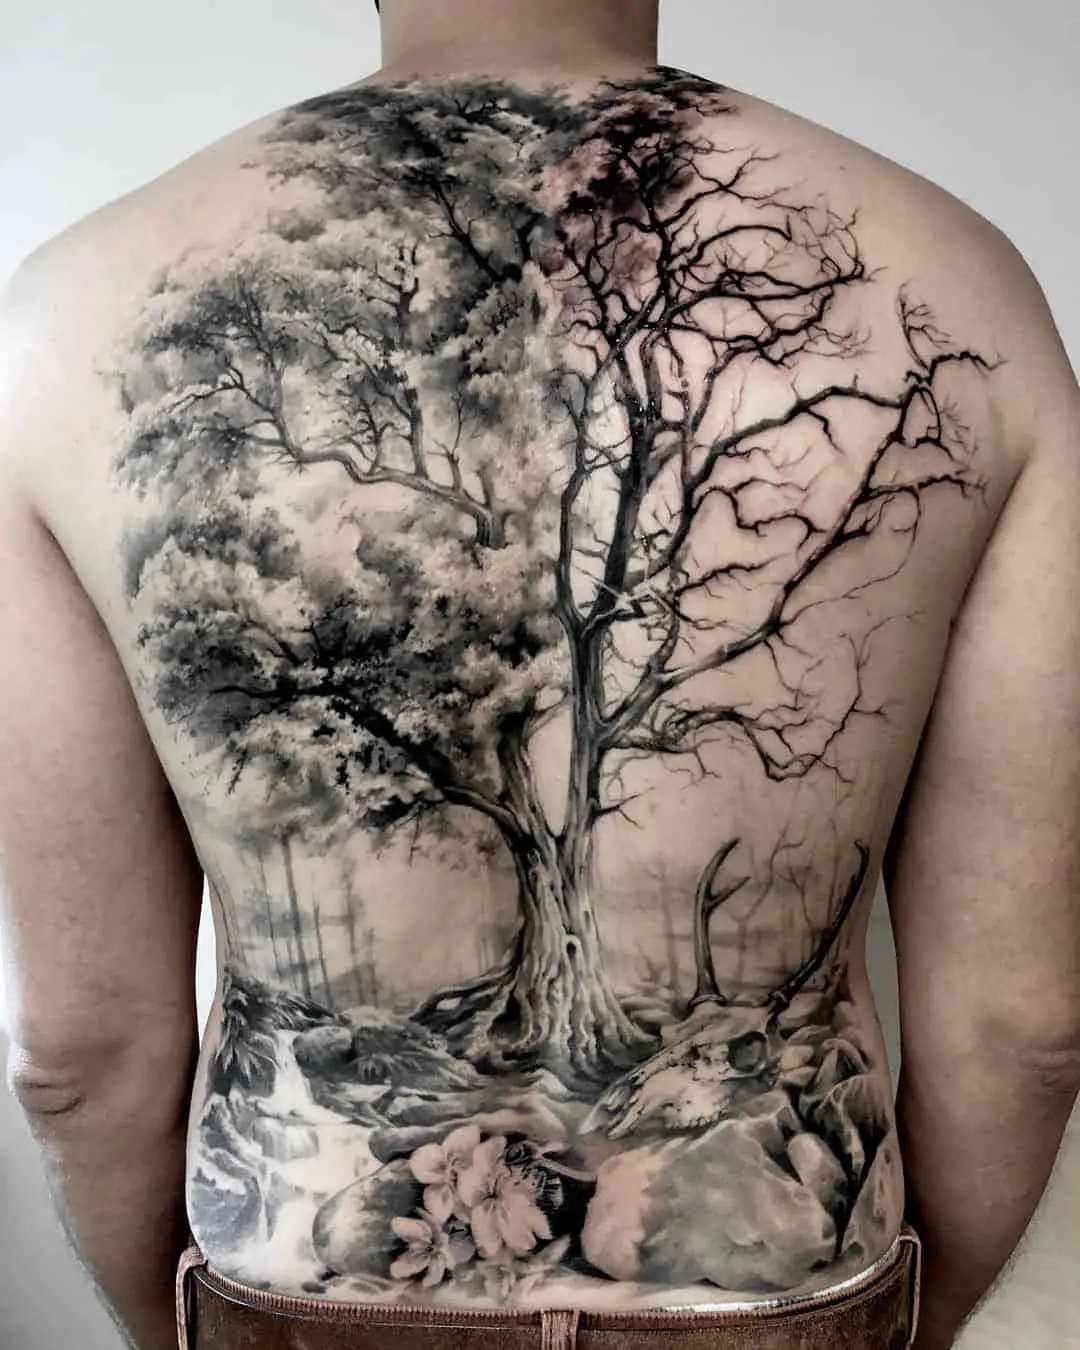 Amazing full back tattoo by tatamata.de